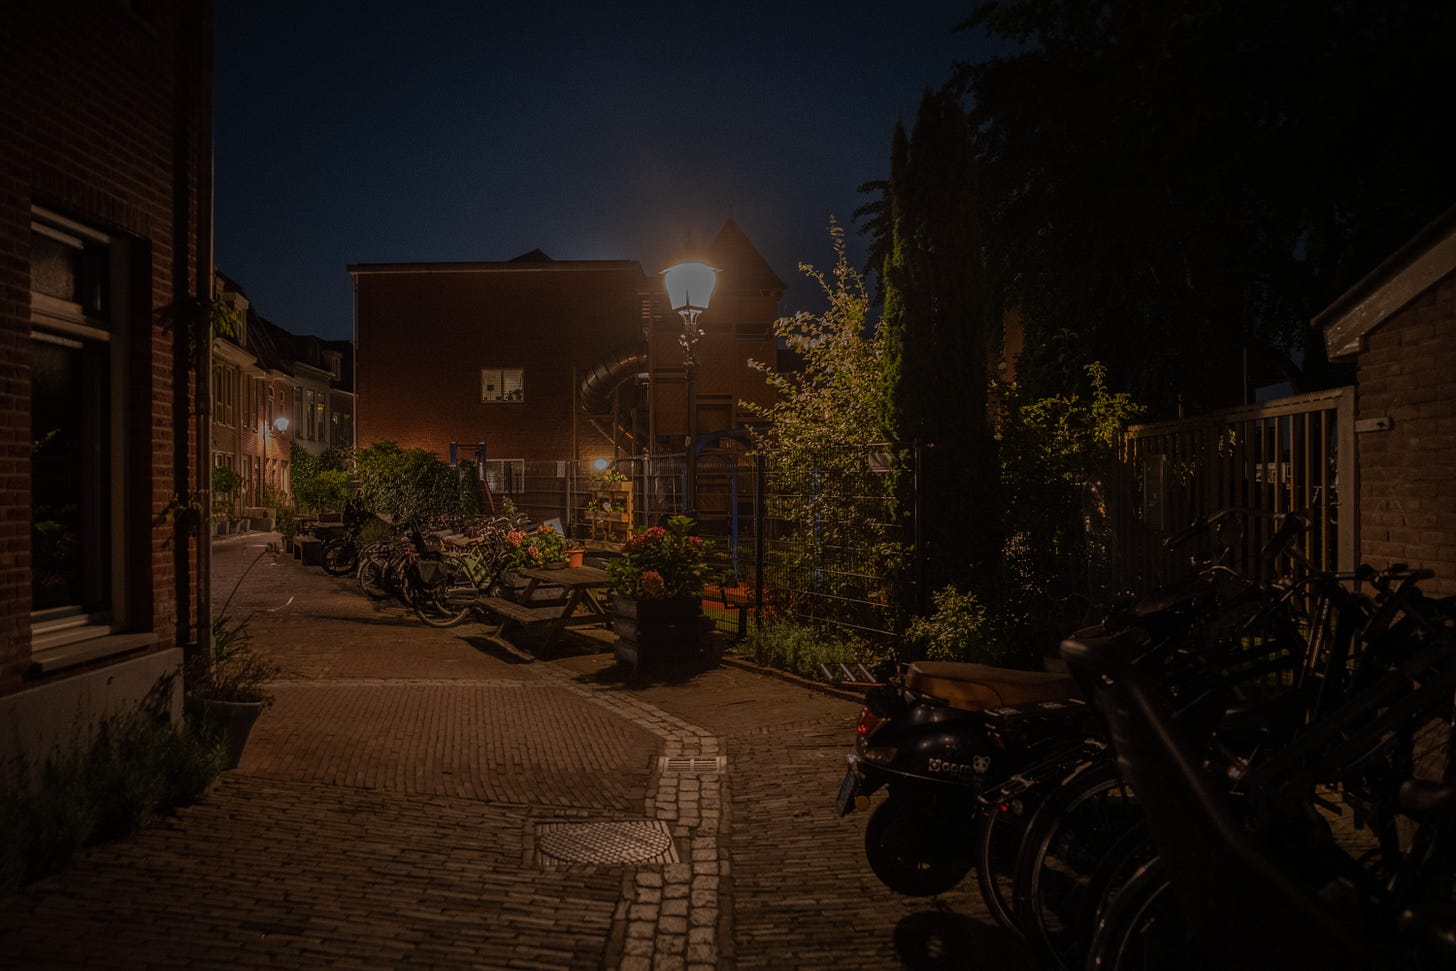 Haarlem street at night under a soft street lamp.